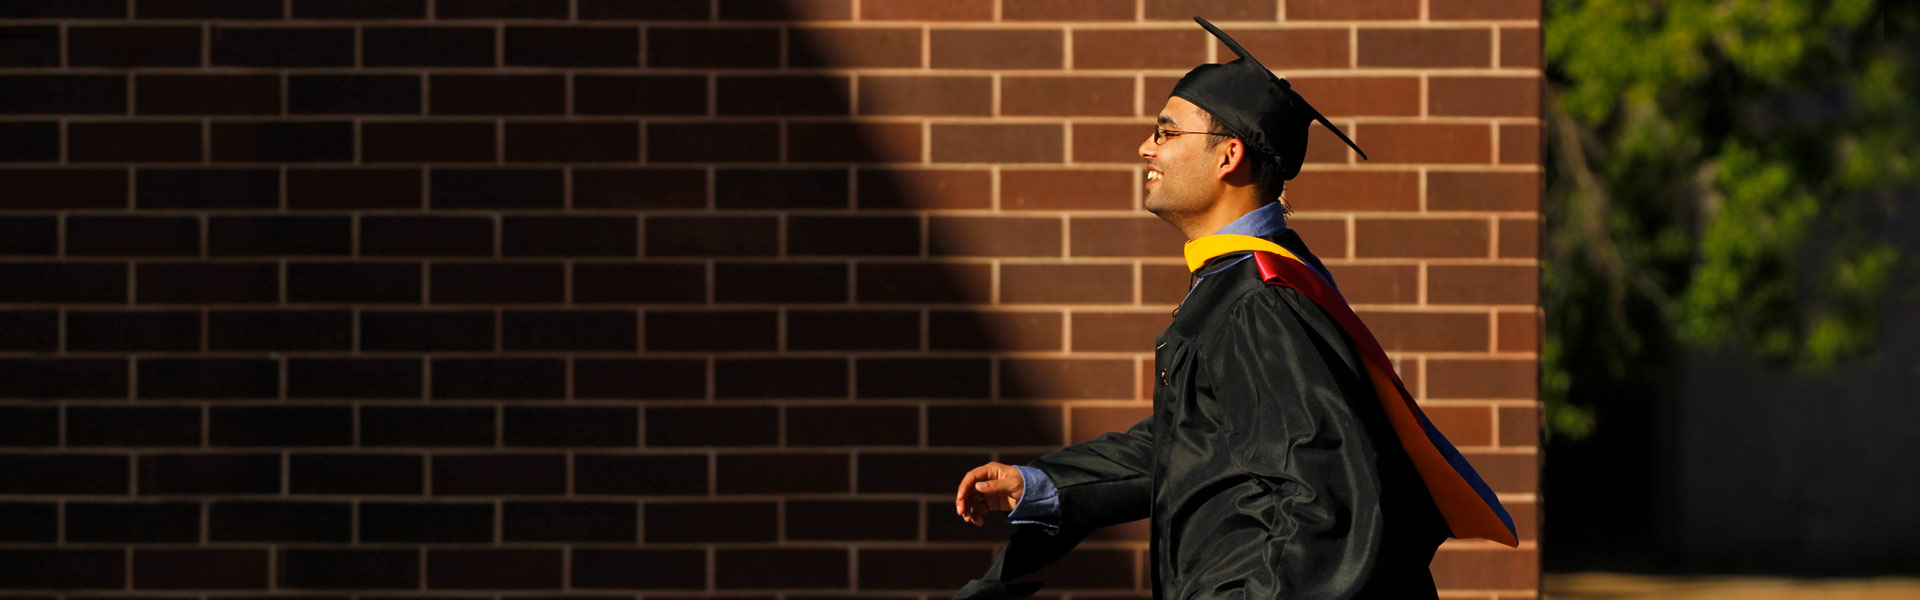 Student Graduate Walking